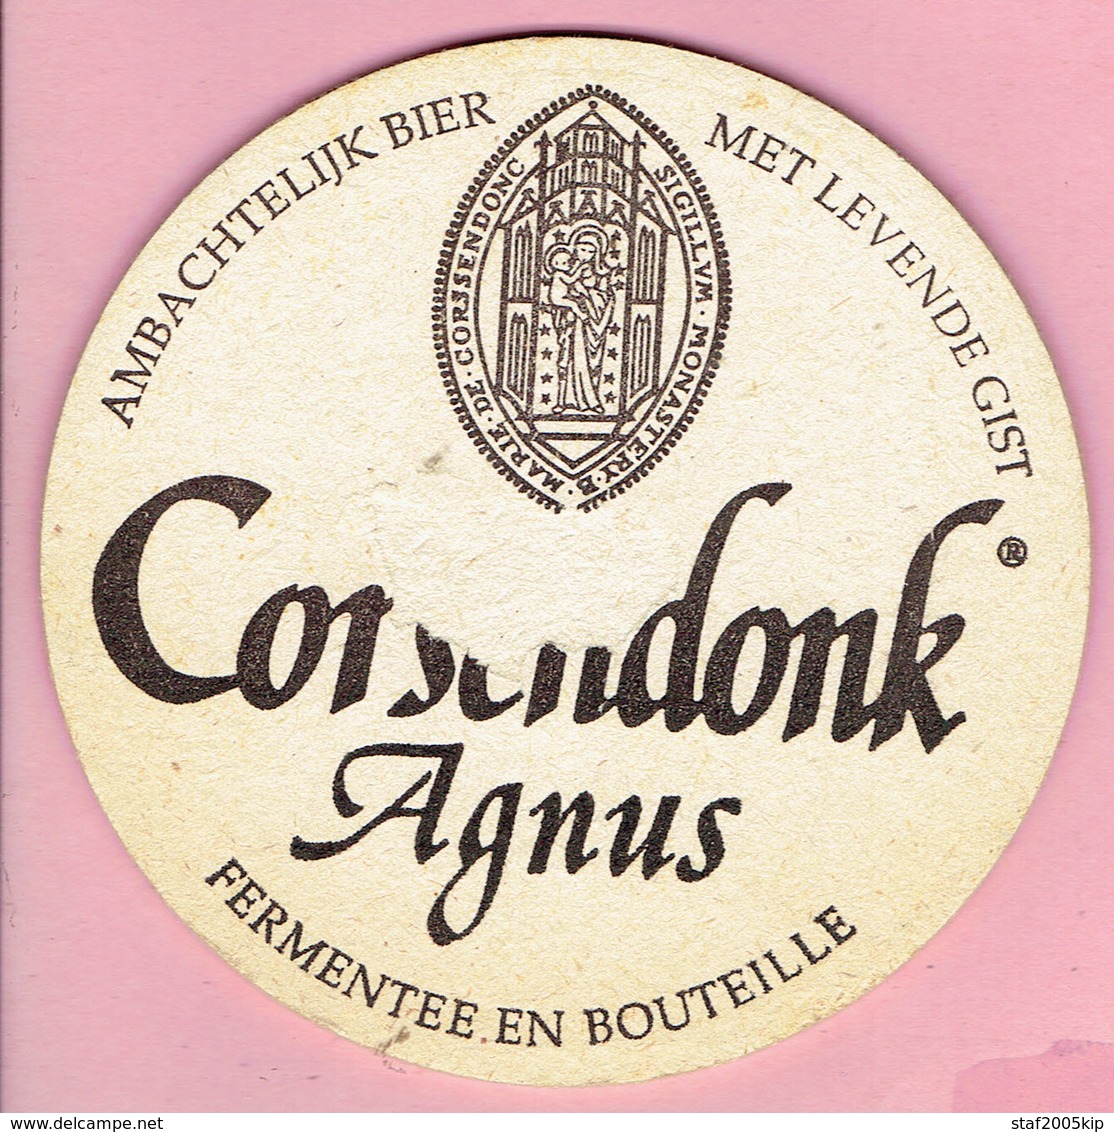 Bierviltje - Corsendonk Agnus - Kerstmarkt Warande Turnhout 1996 - Sous-bocks